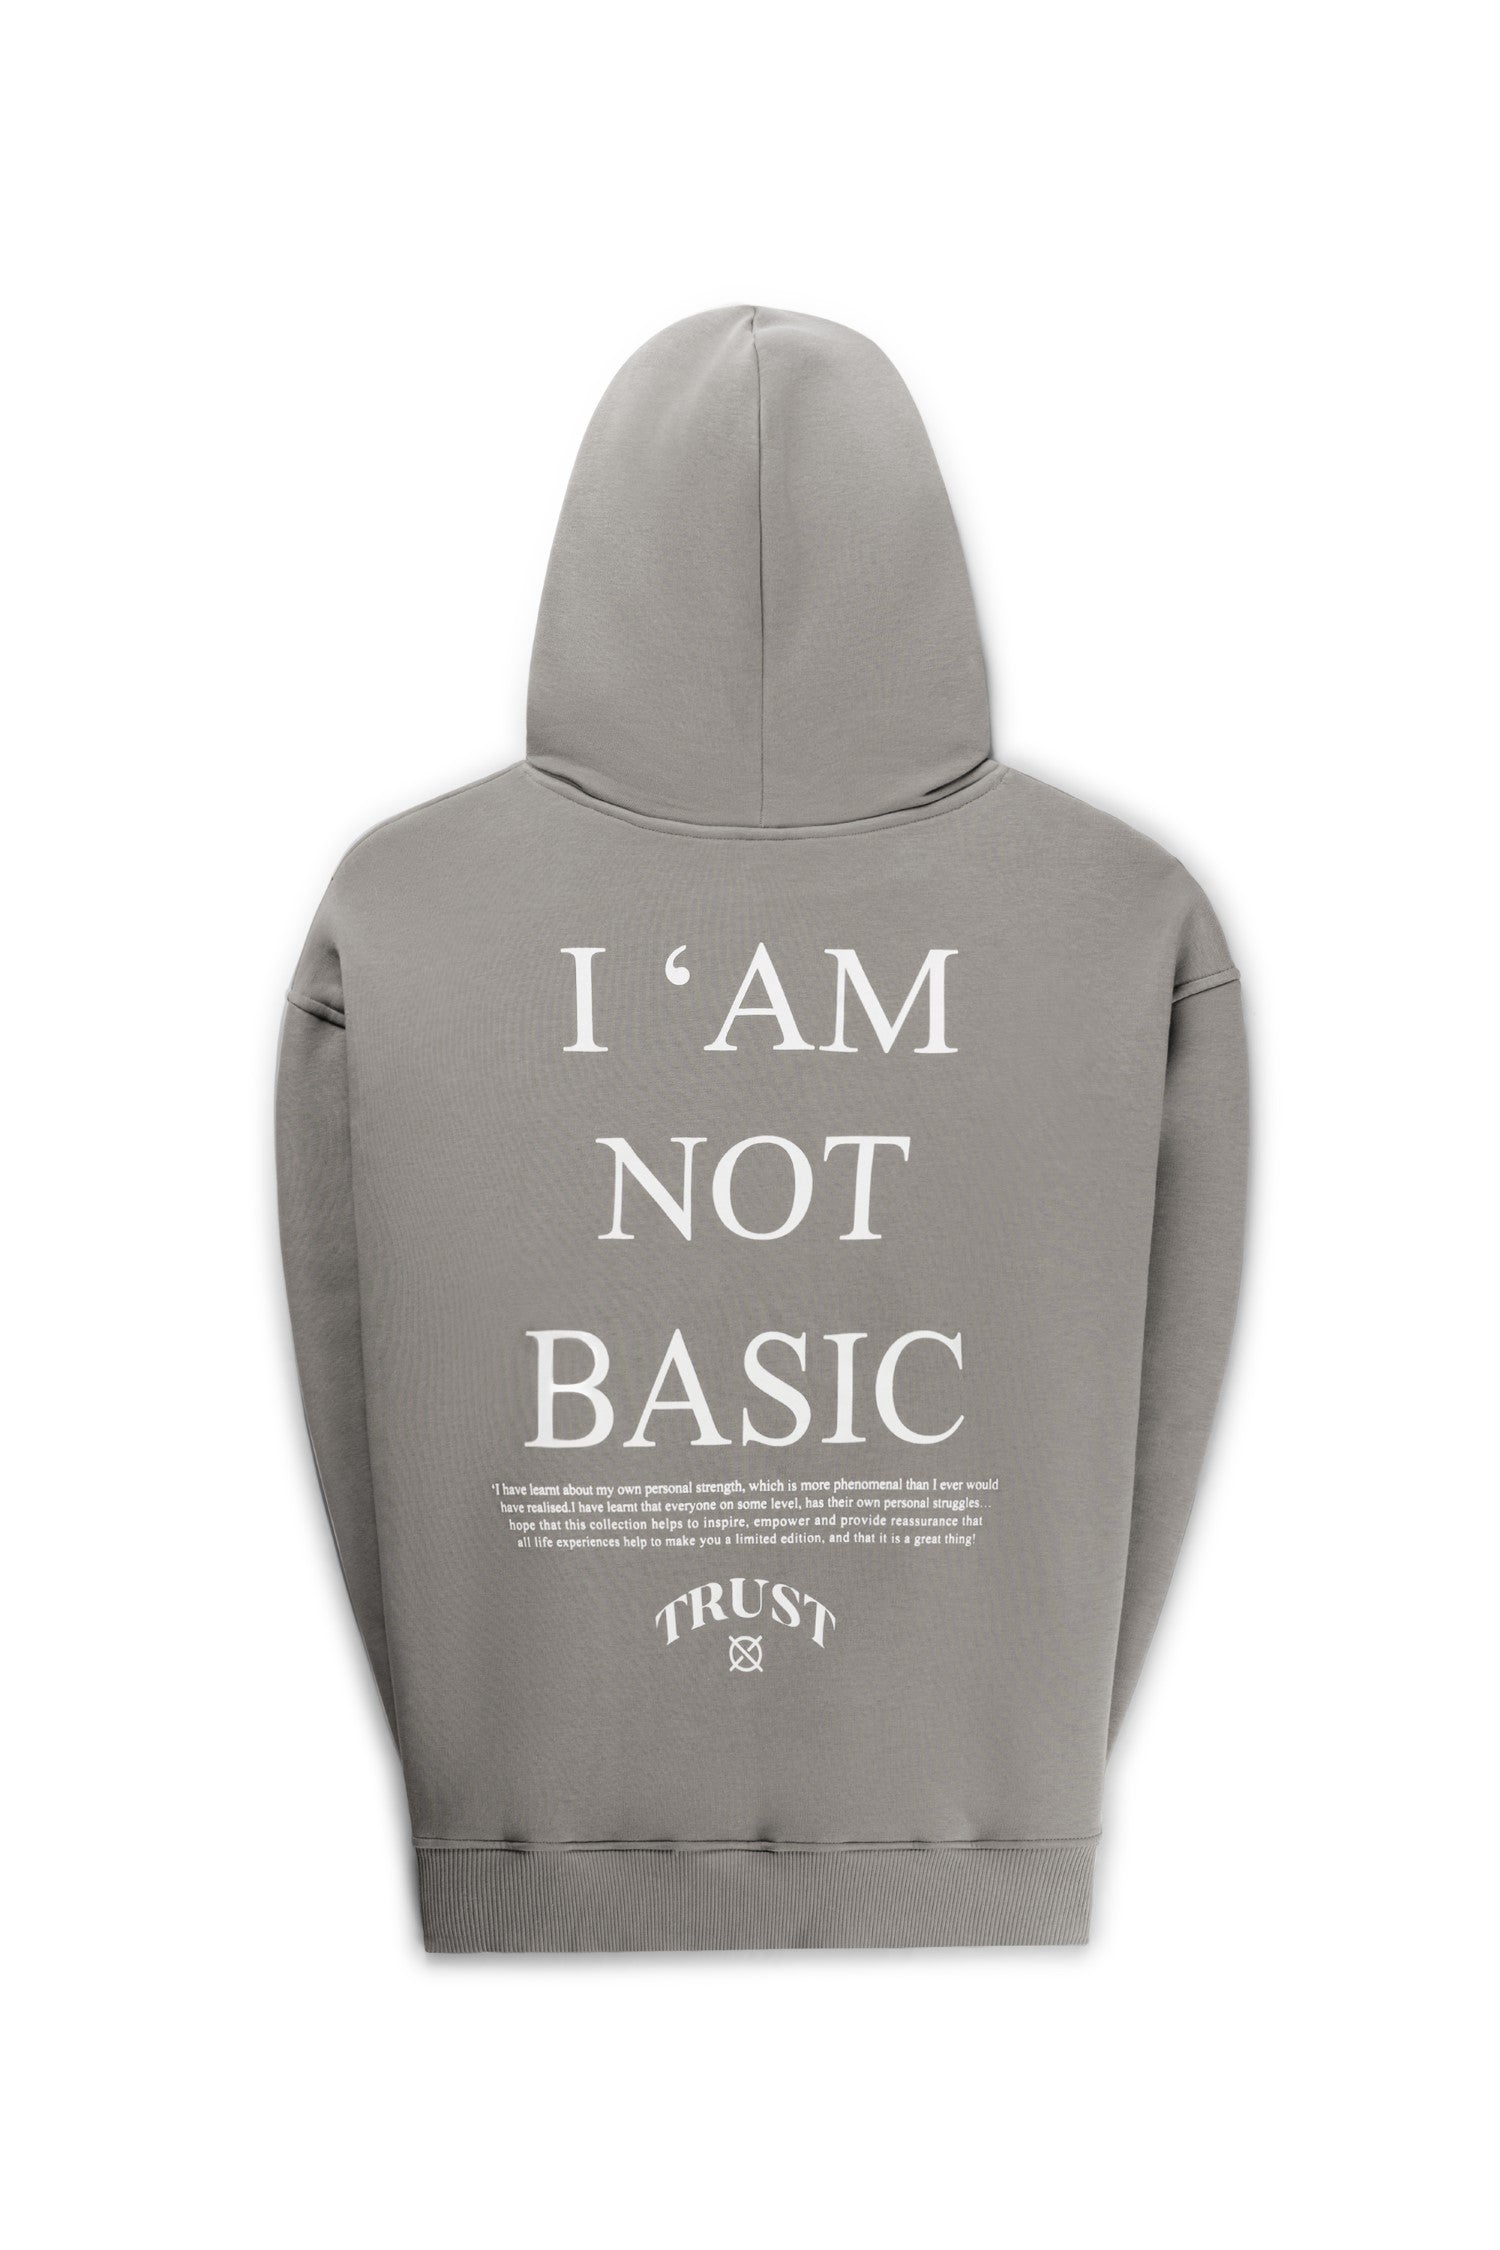 'I'AM NOT BASIC' Grey Zipper Hoodie